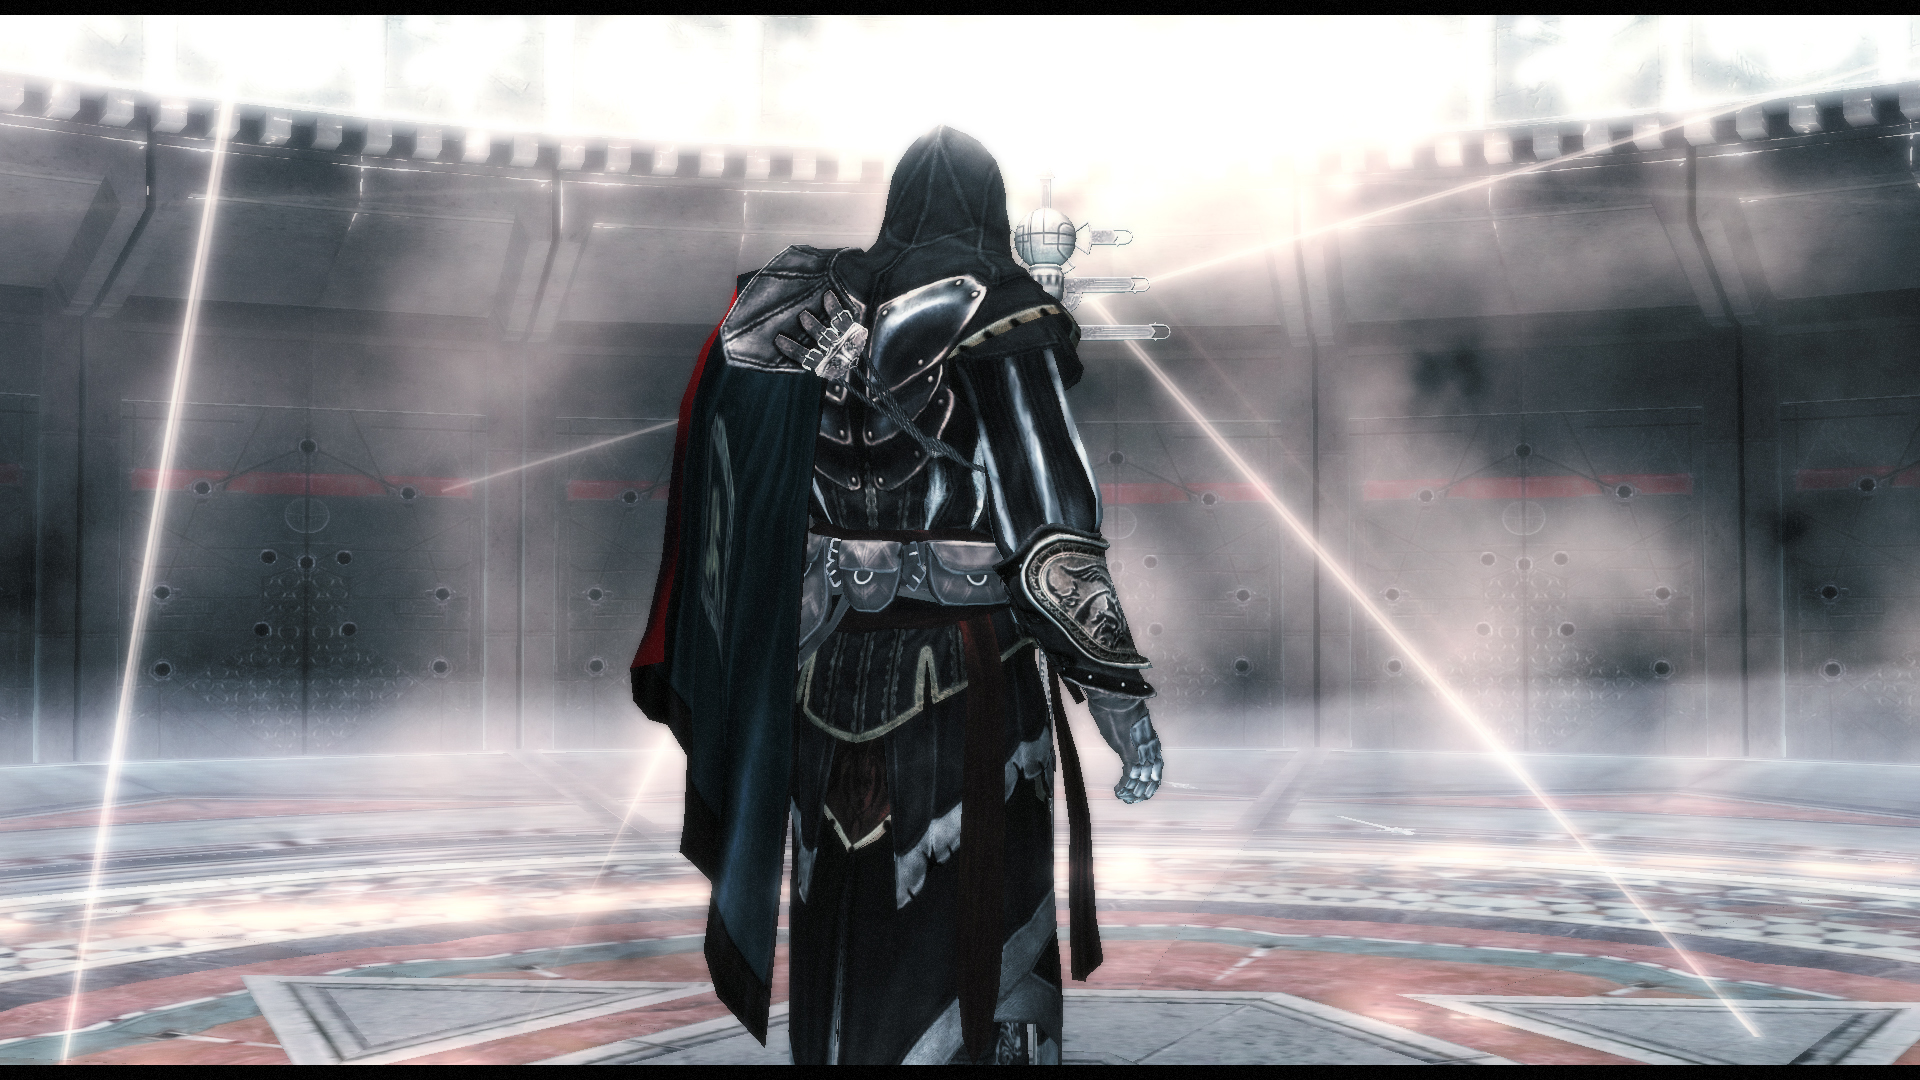 Descarga gratuita de fondo de pantalla para móvil de Assassin's Creed Ii, Assassin's Creed, Videojuego.